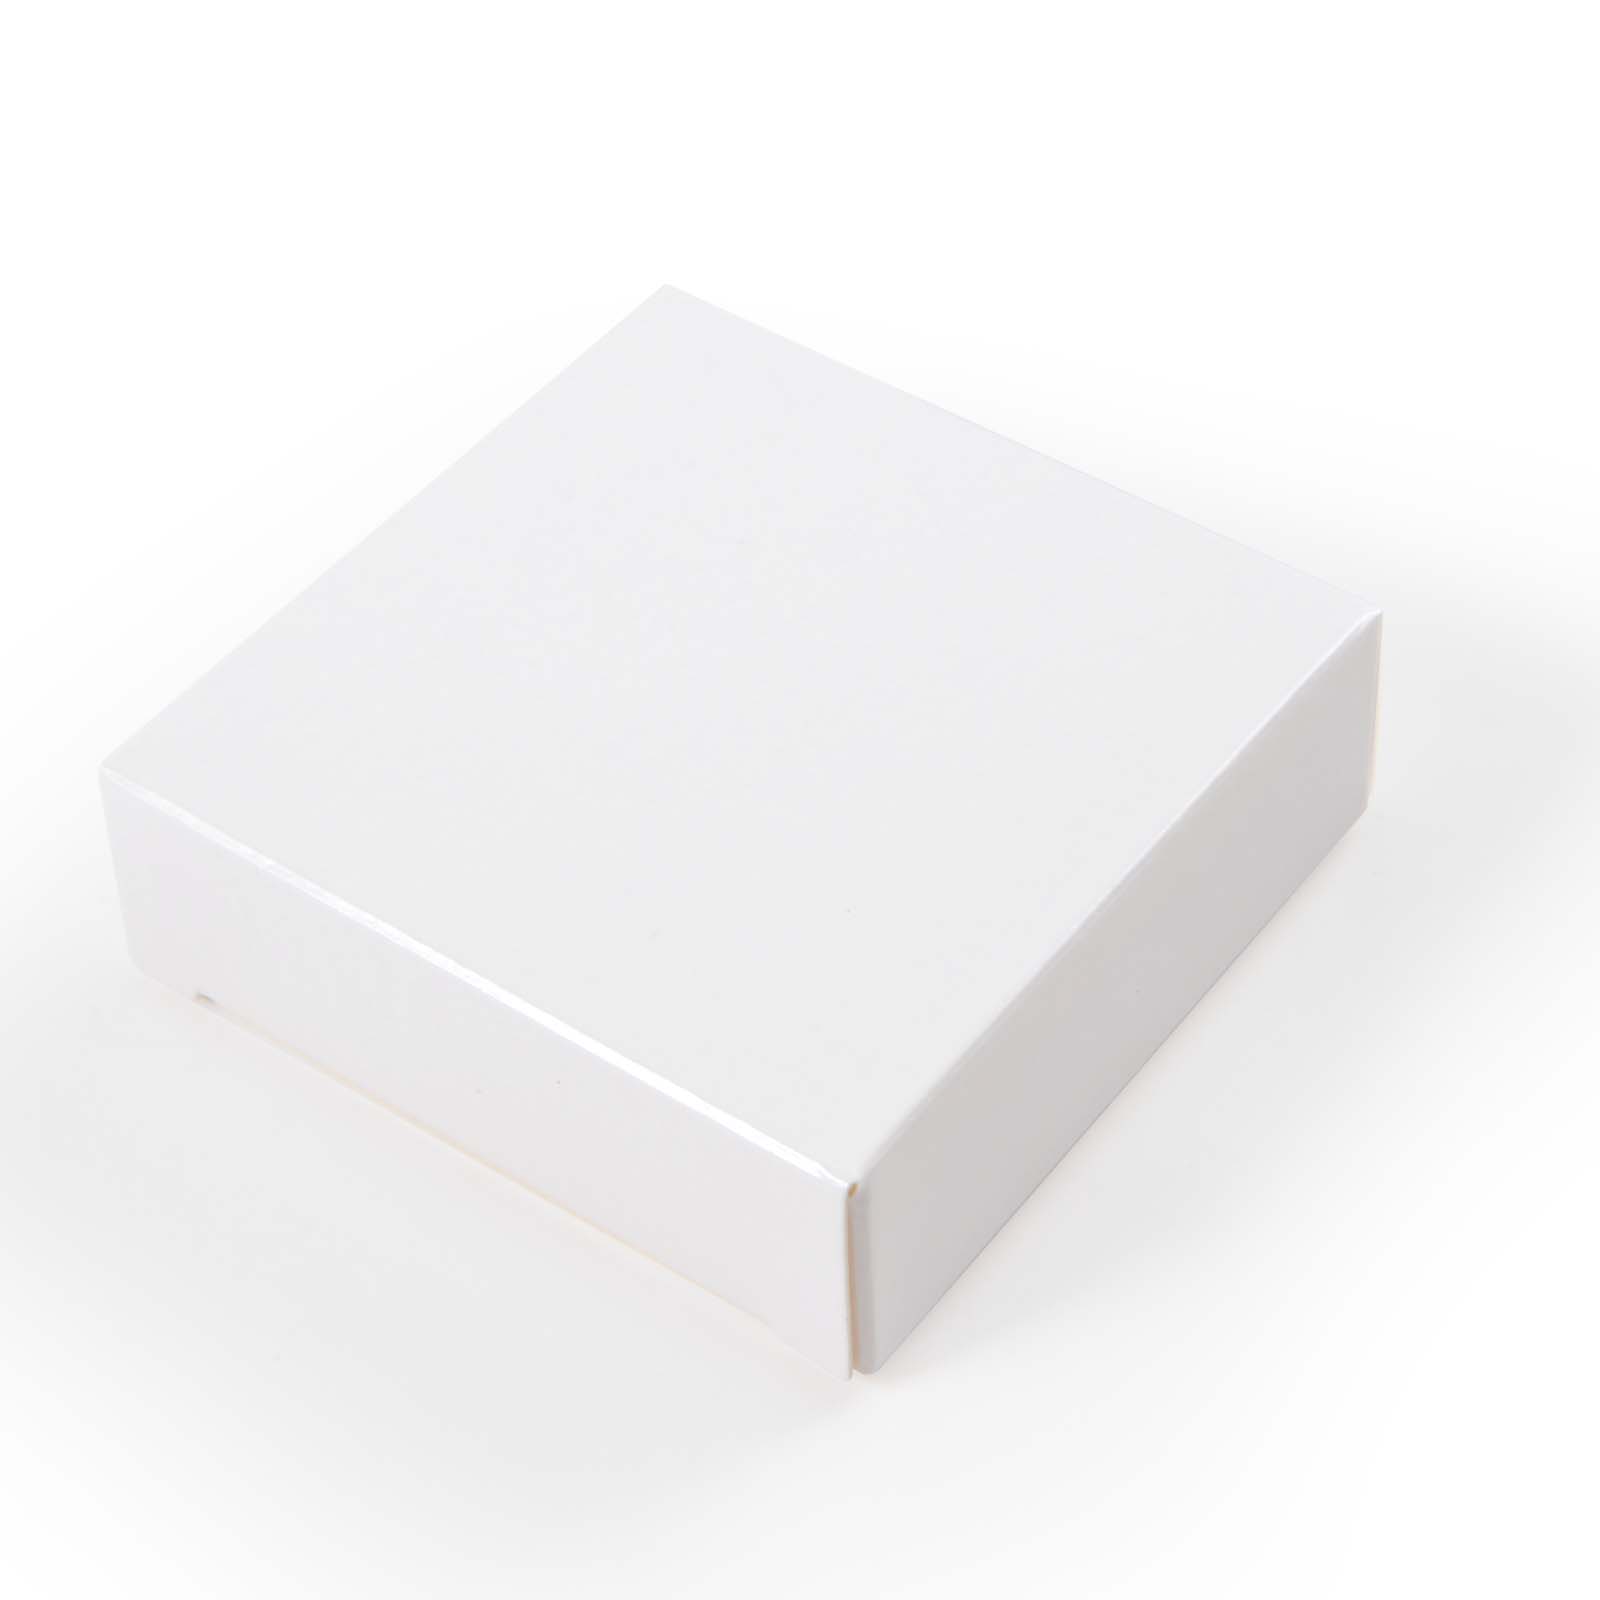 LL322 - White Cardboard Box 